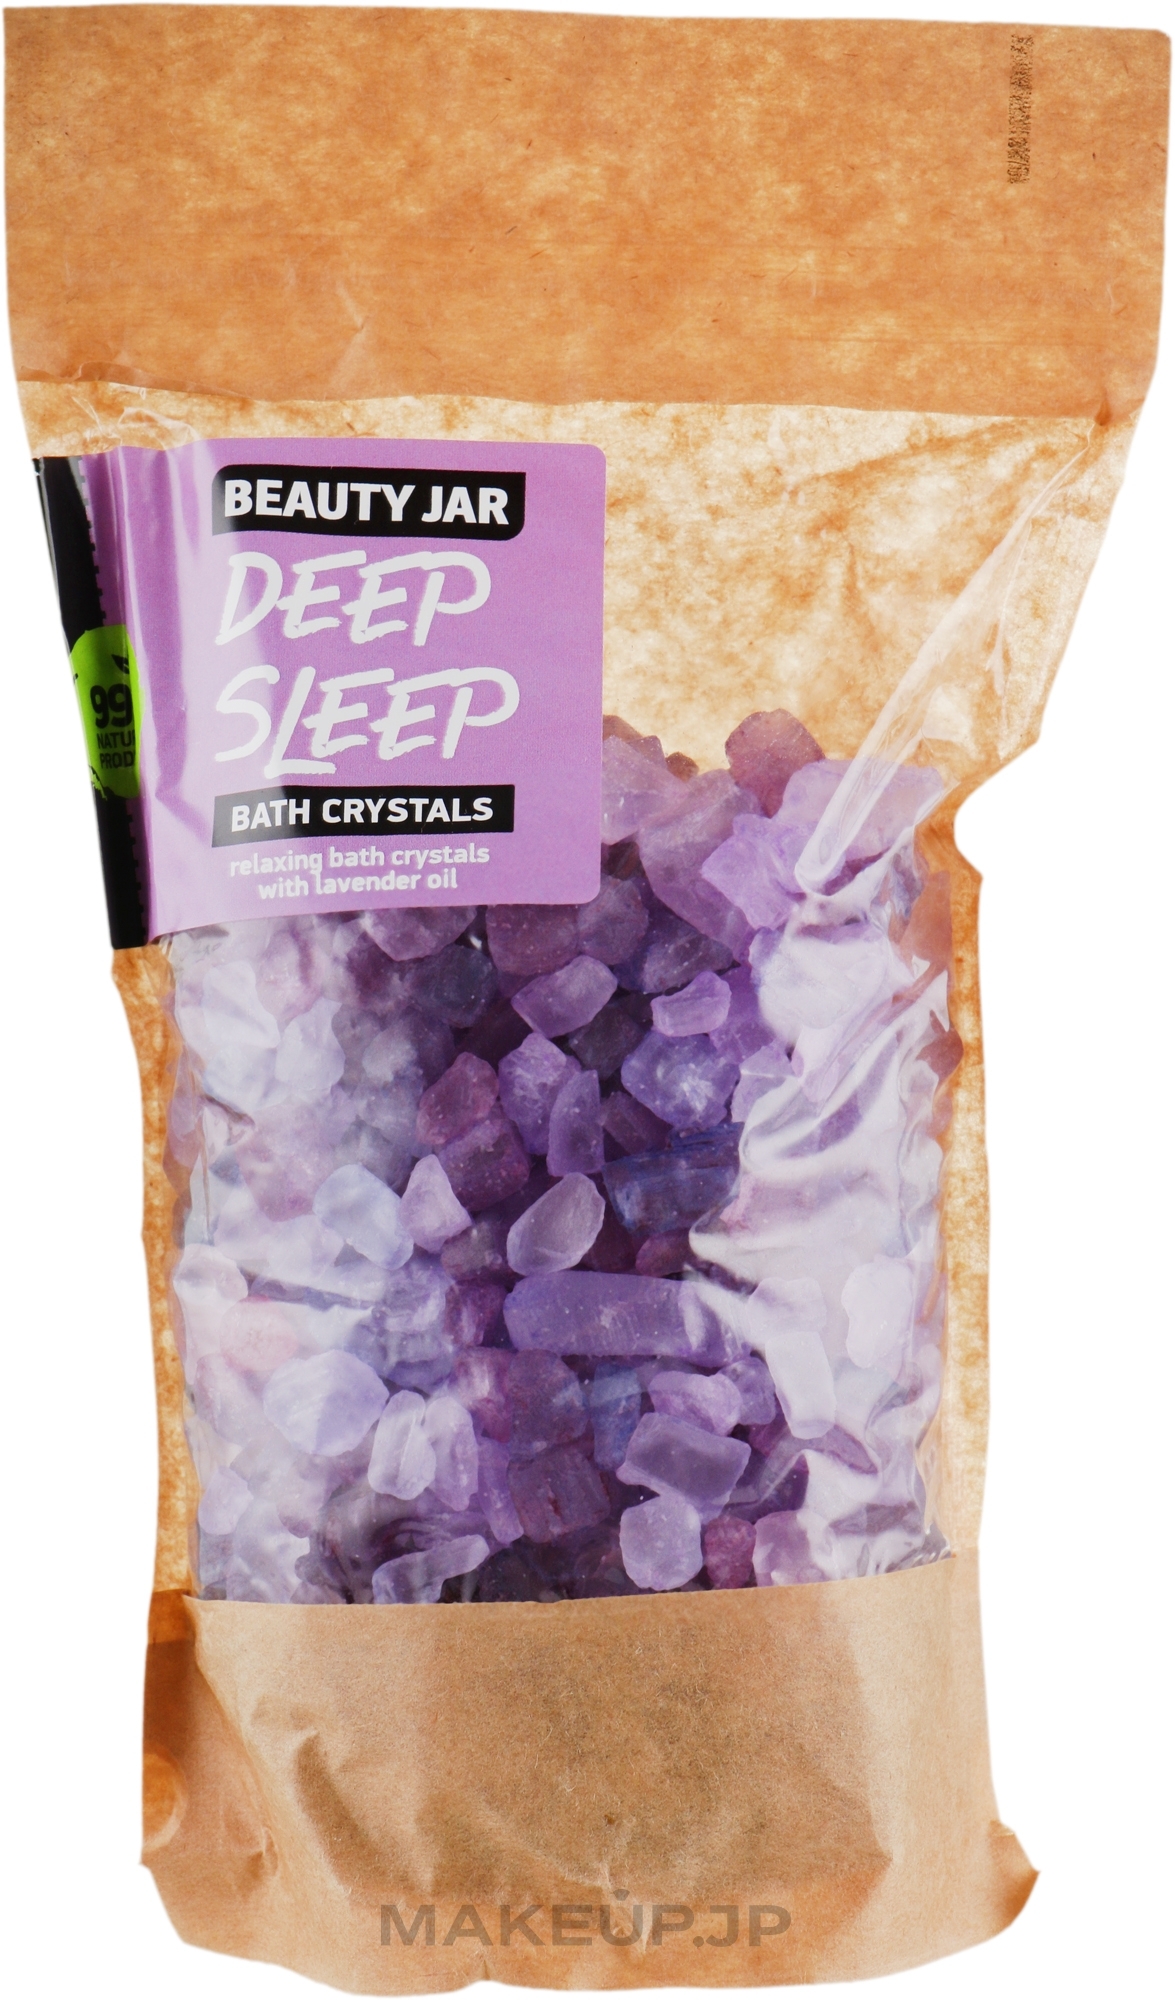 Relaxing Bath Crystals with Lavender Oil 'Deep Sleep' - Beauty Jar Bath Crystals — photo 600 g